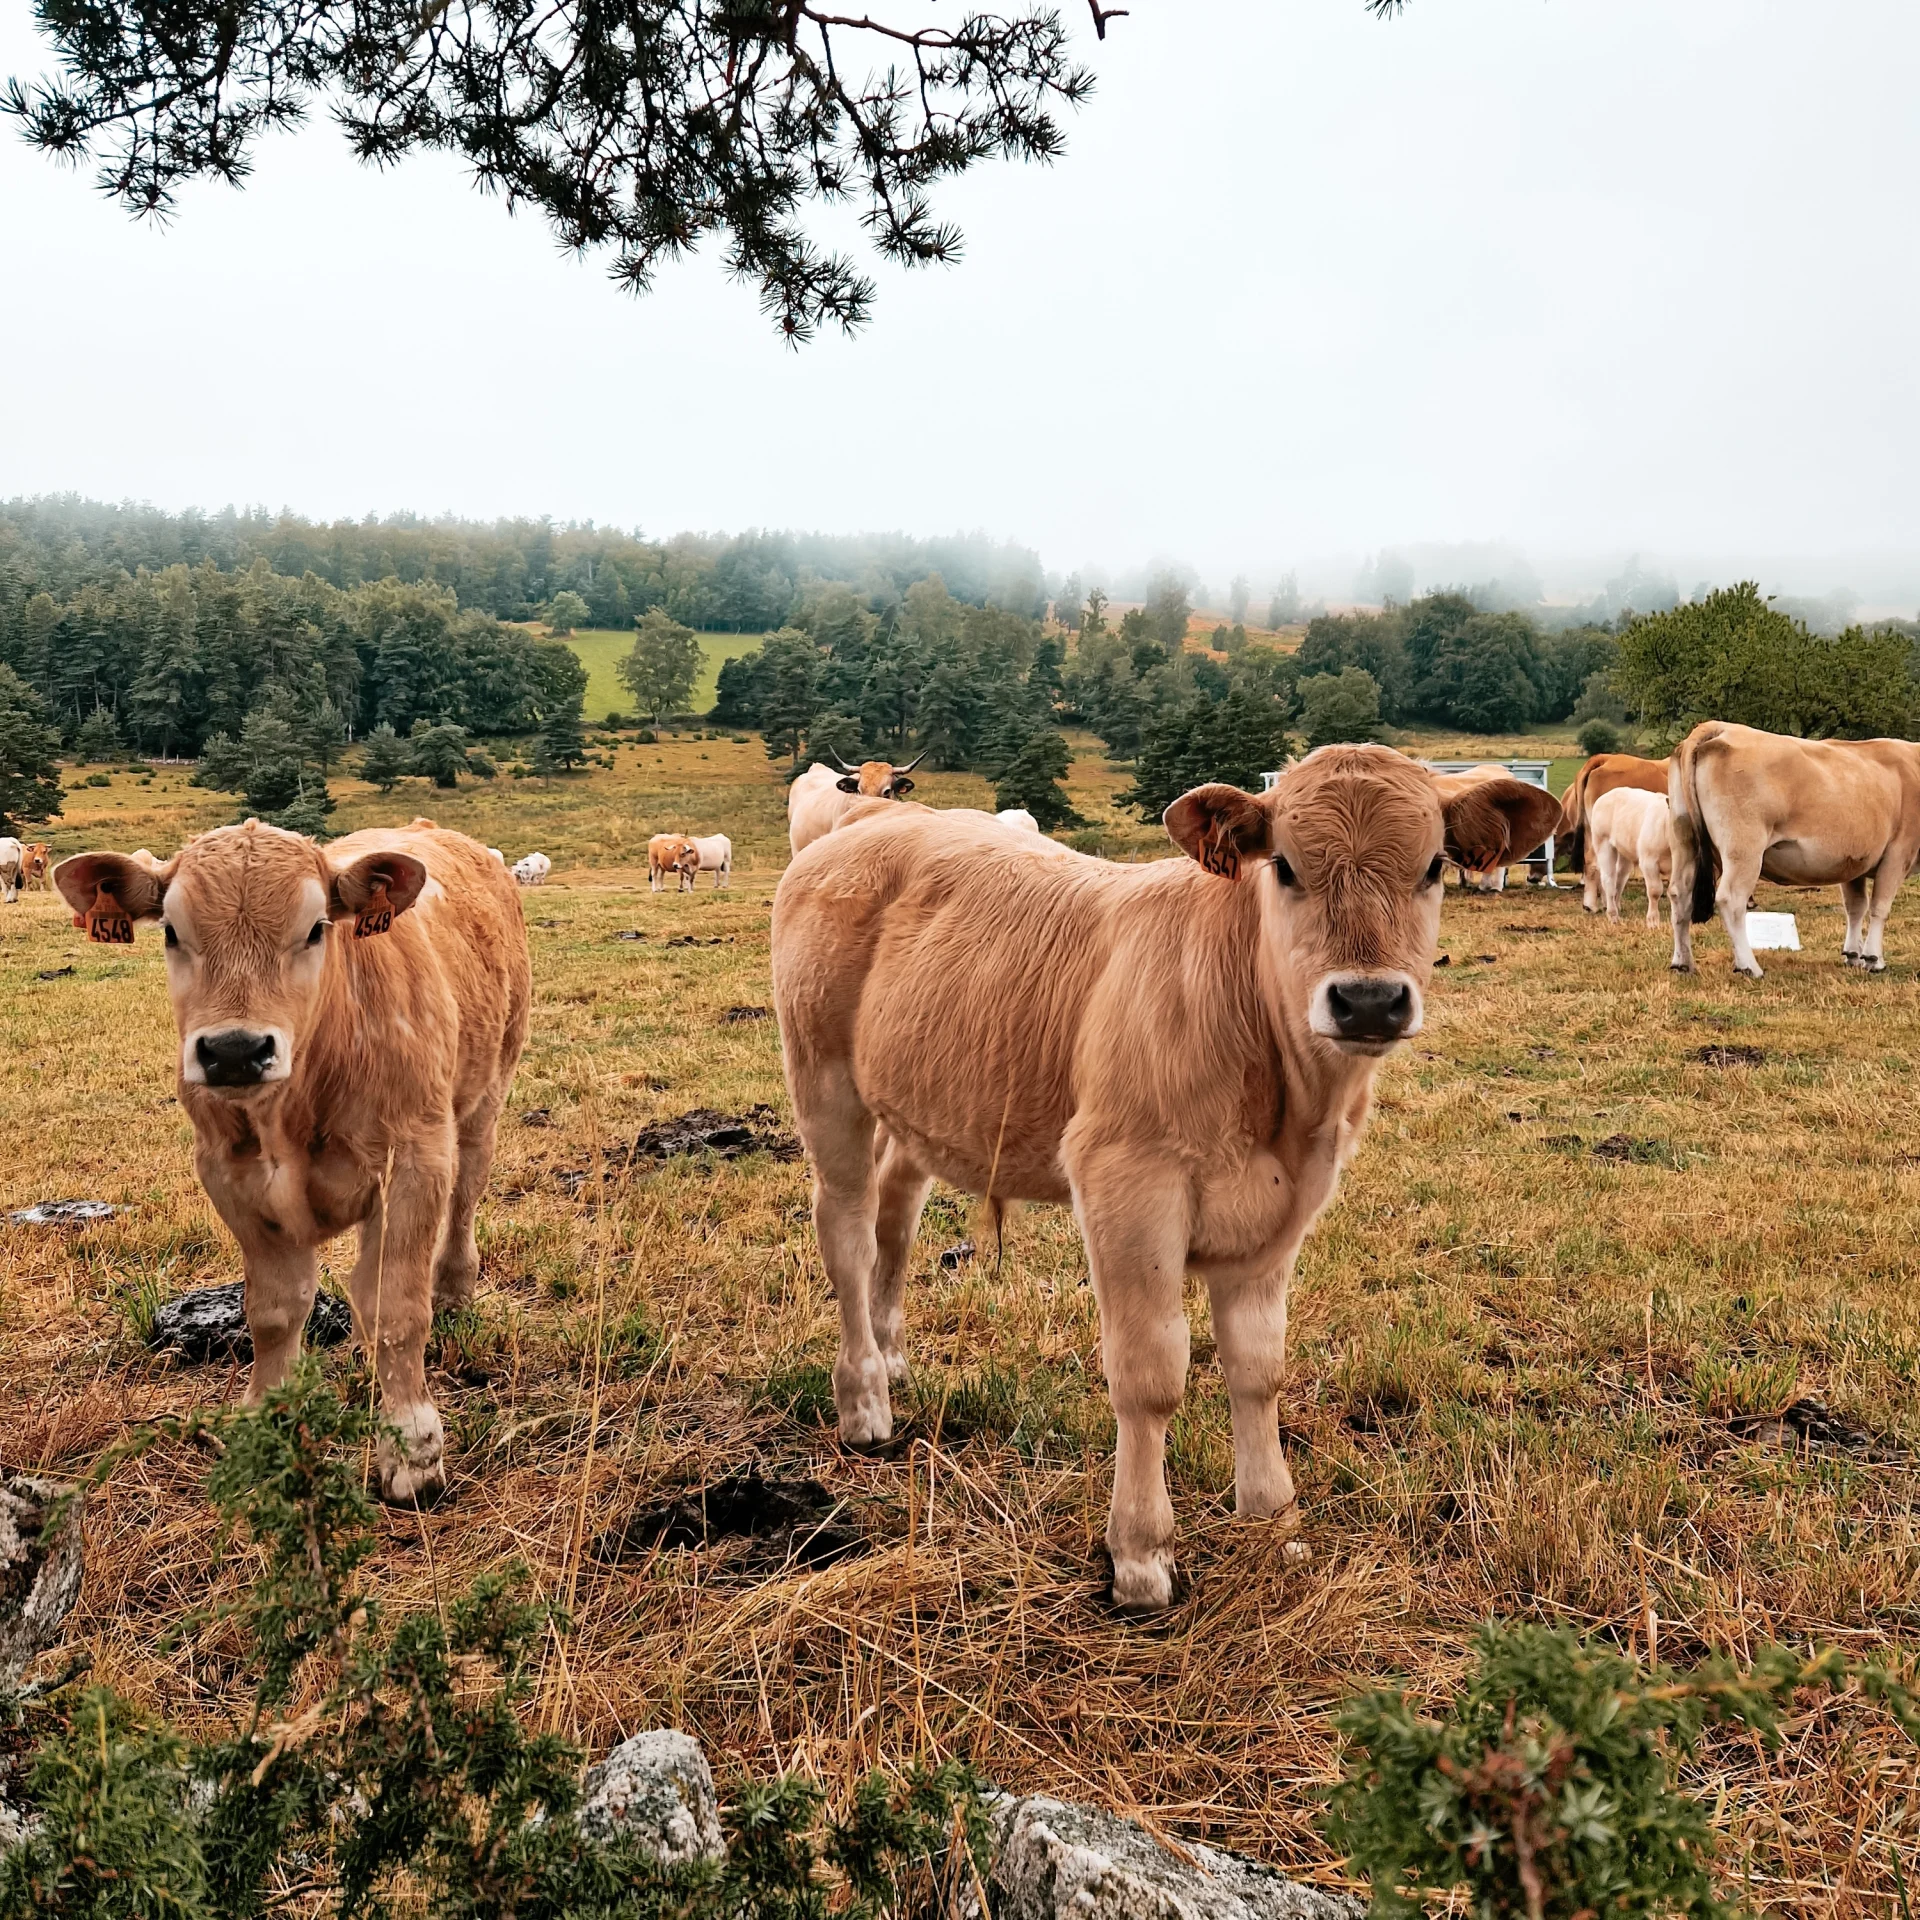 The cows of the Aubrac plateau